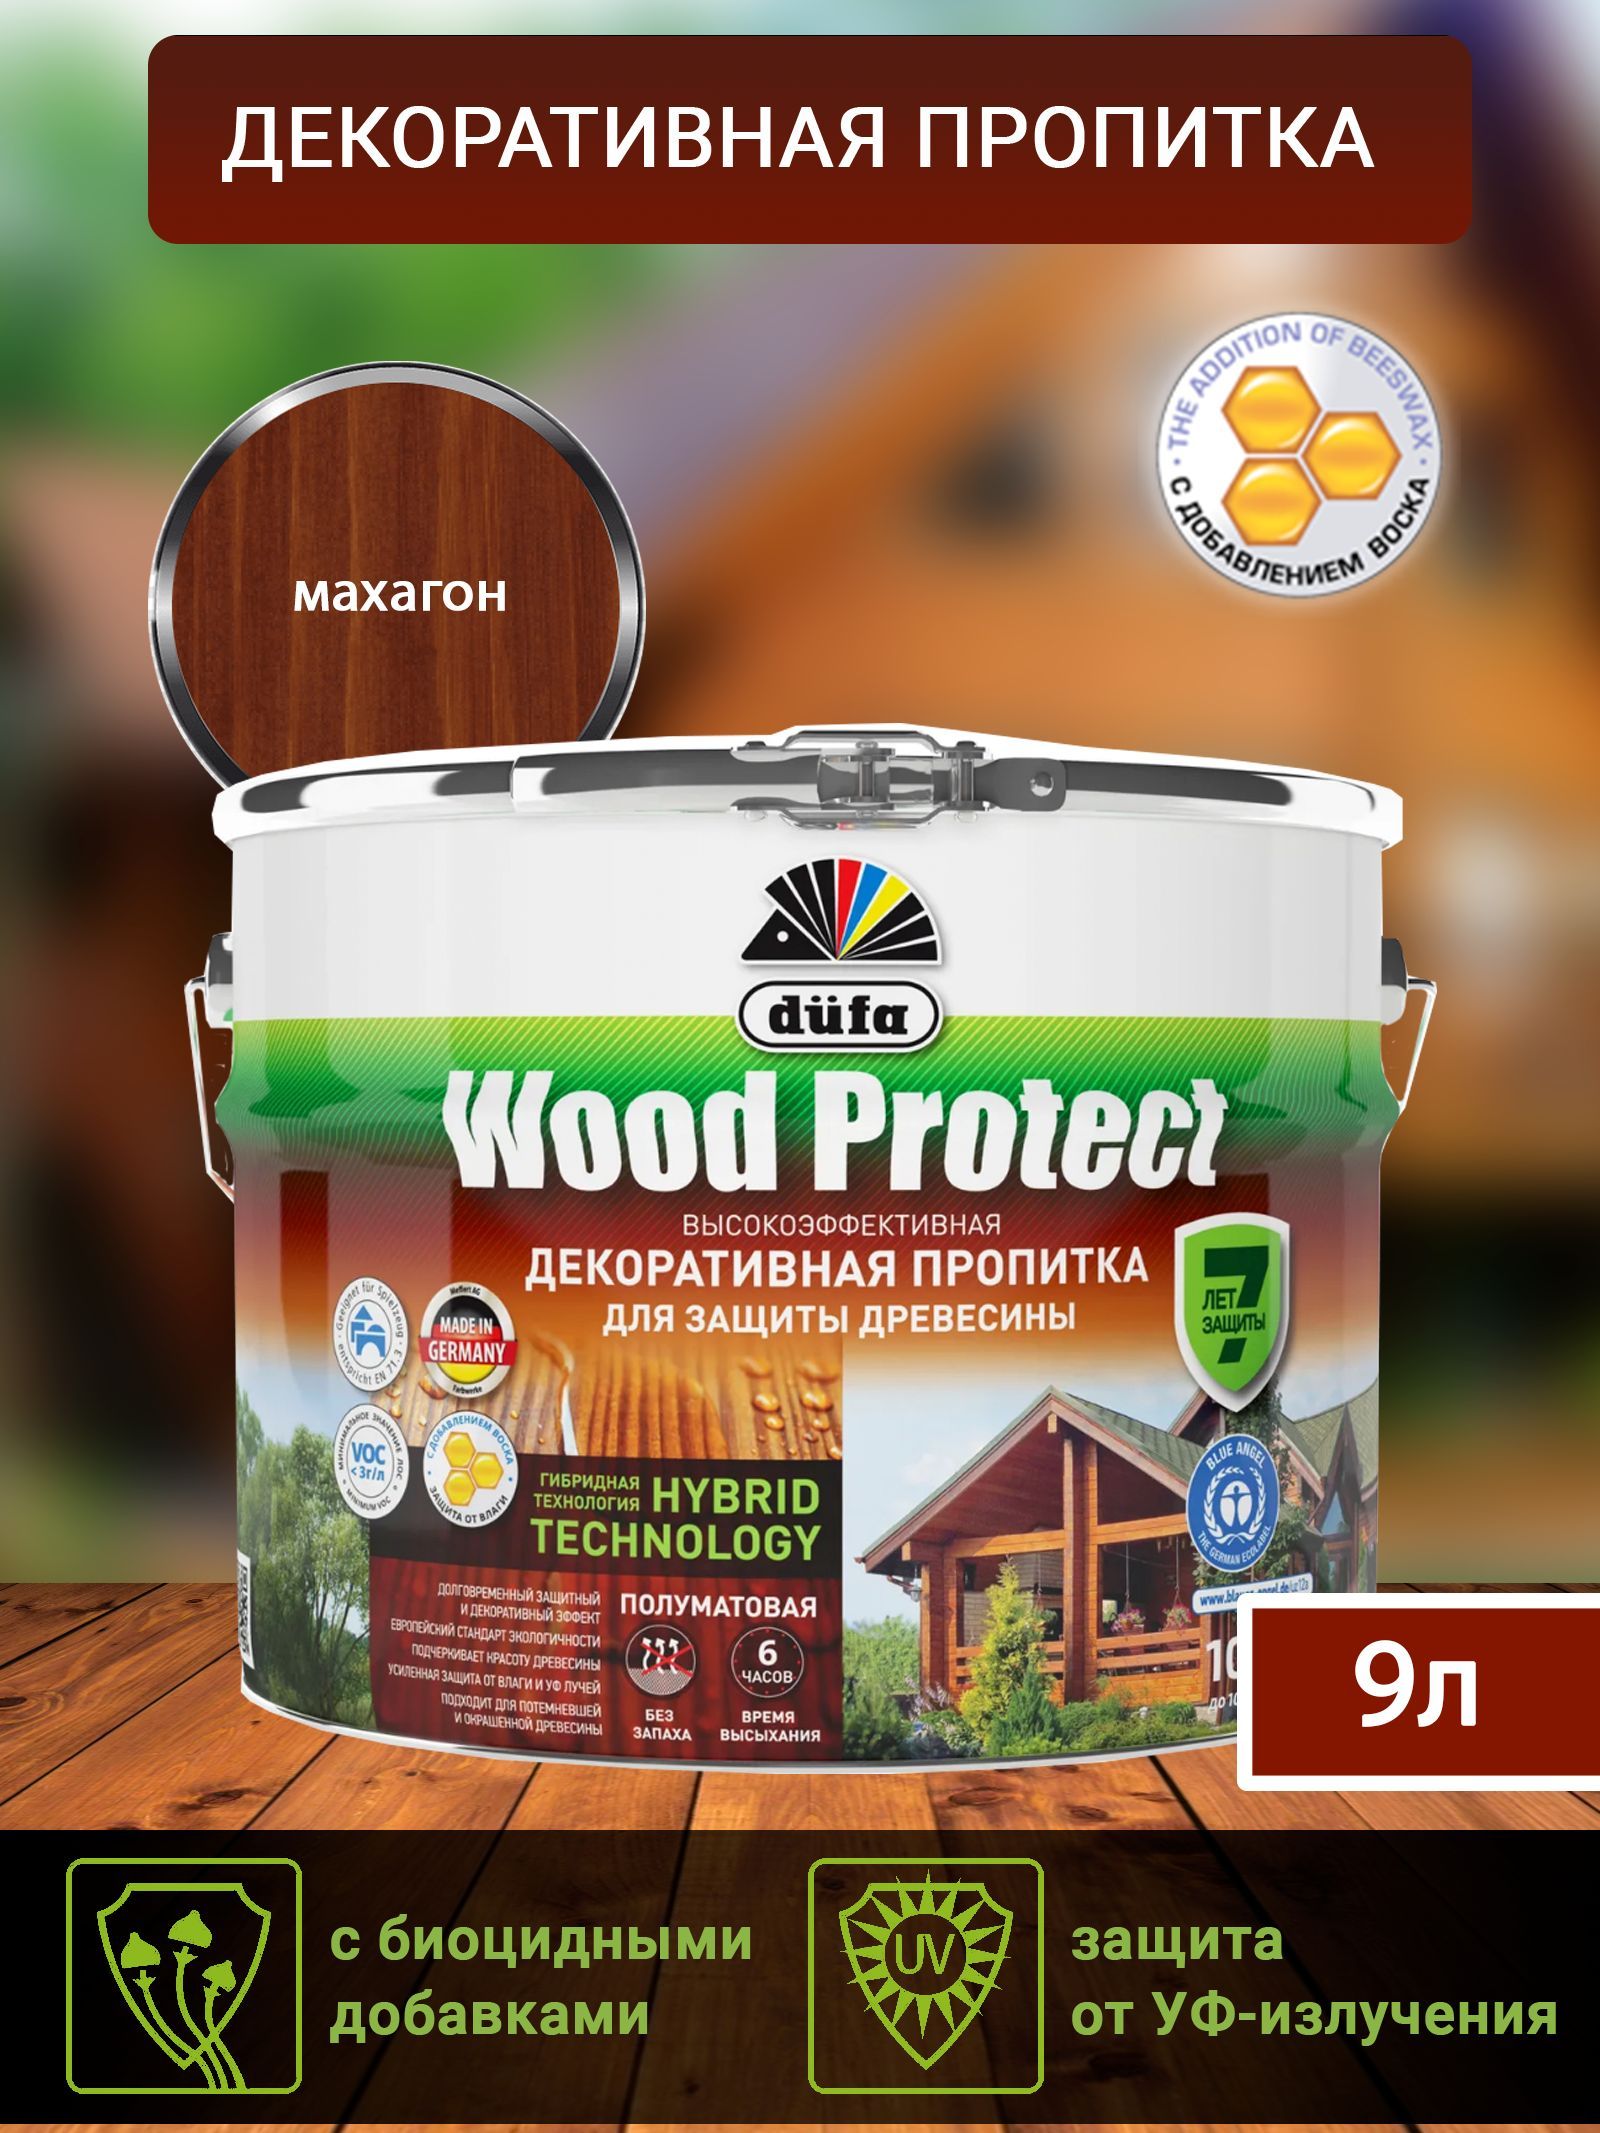 Dufa Пропитка “Wood Protect” для защиты древесины; махагон 9 л, шт